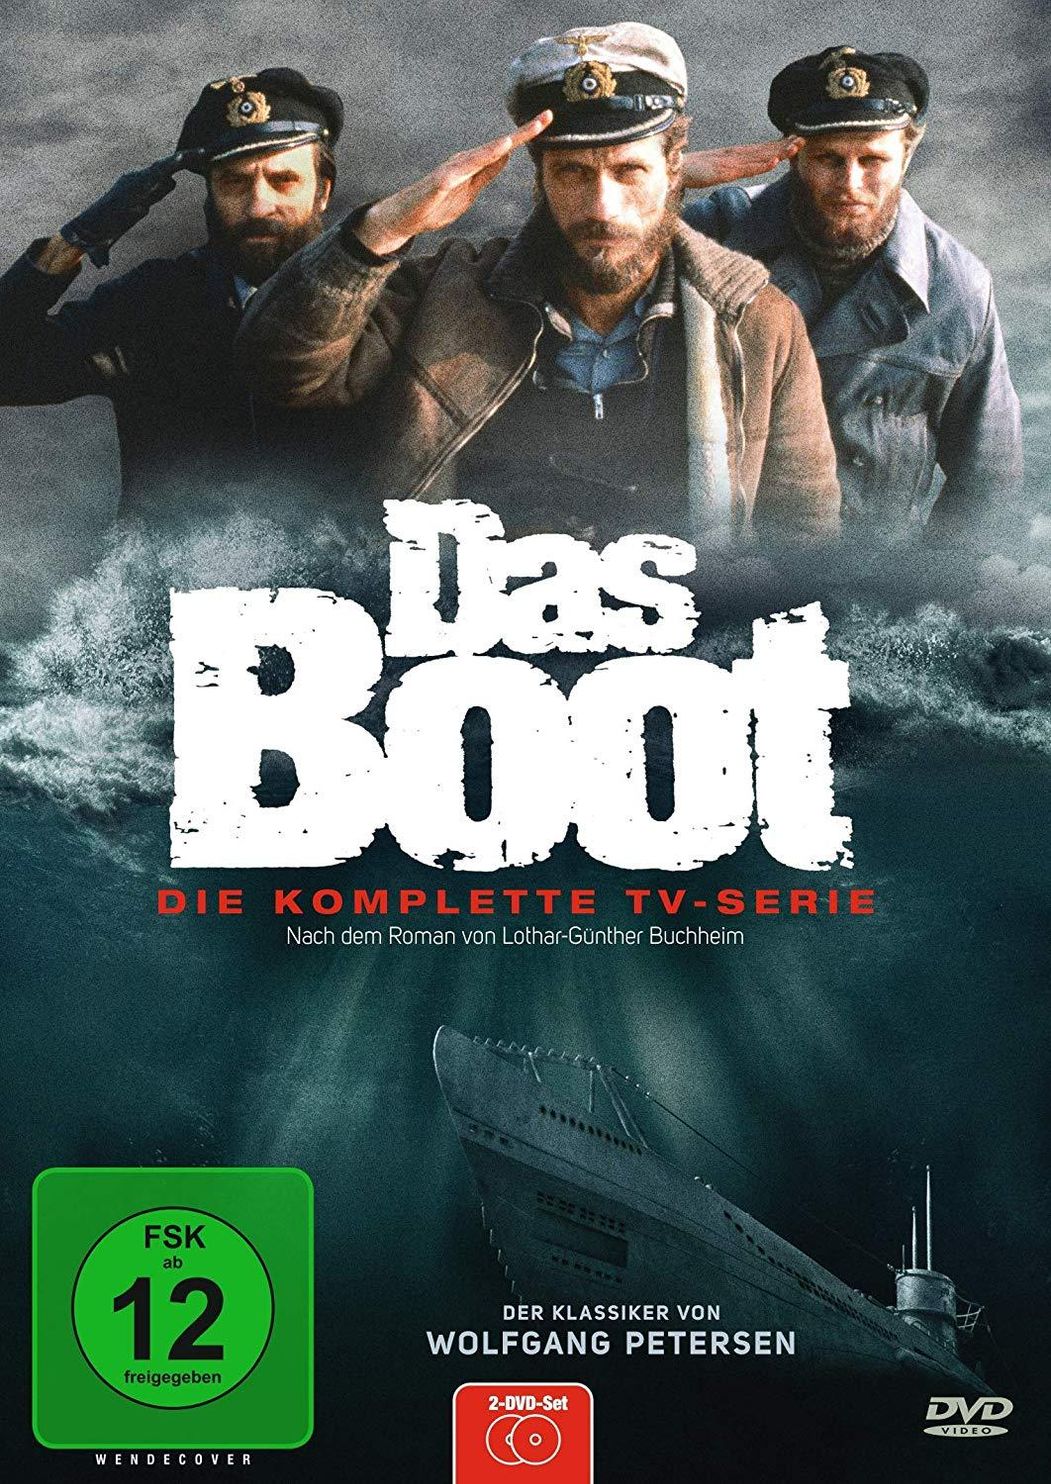 Das Boot - Die komplette TV-Serie DVD bei Weltbild.de bestellen